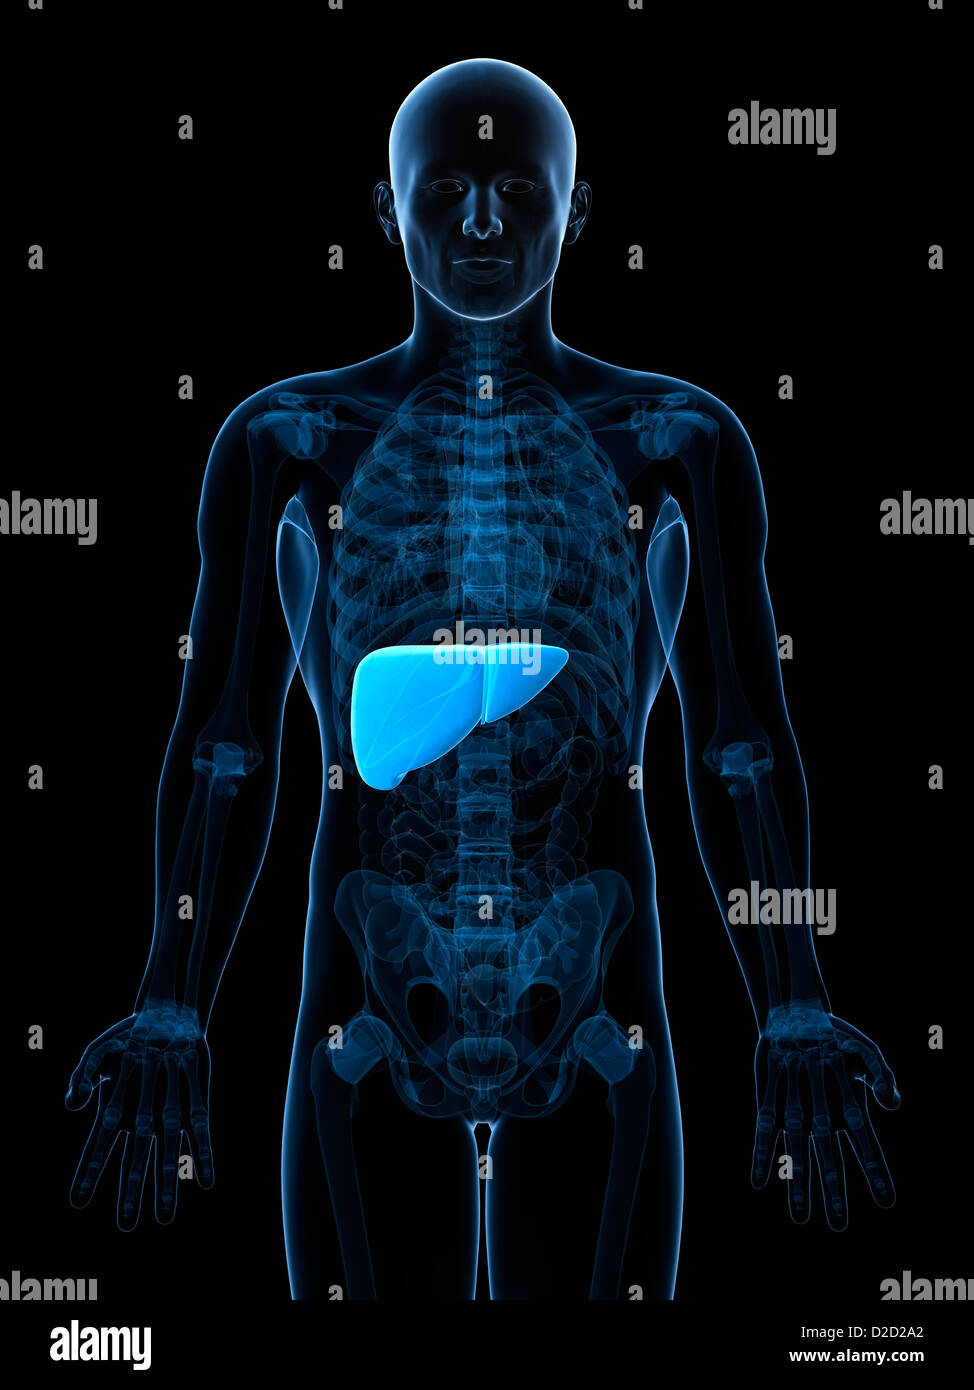 Healthy liver computer artwork Stock Photo - Alamy